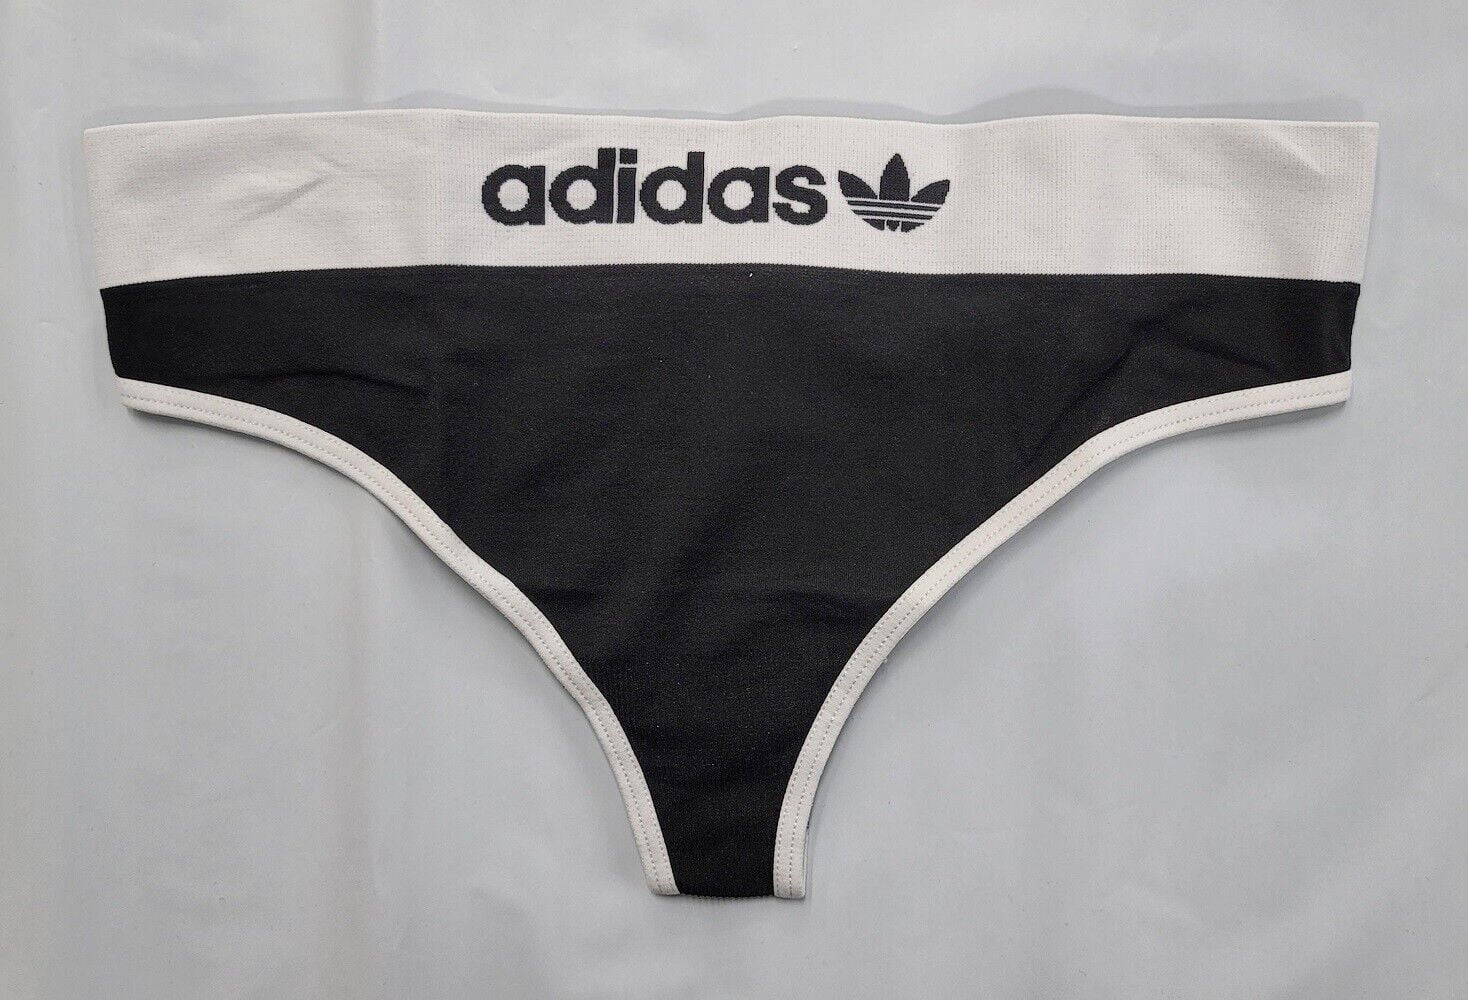 Adidas Women's Seamless Thong Underwear (Black 2, Small) - 4A1H64 